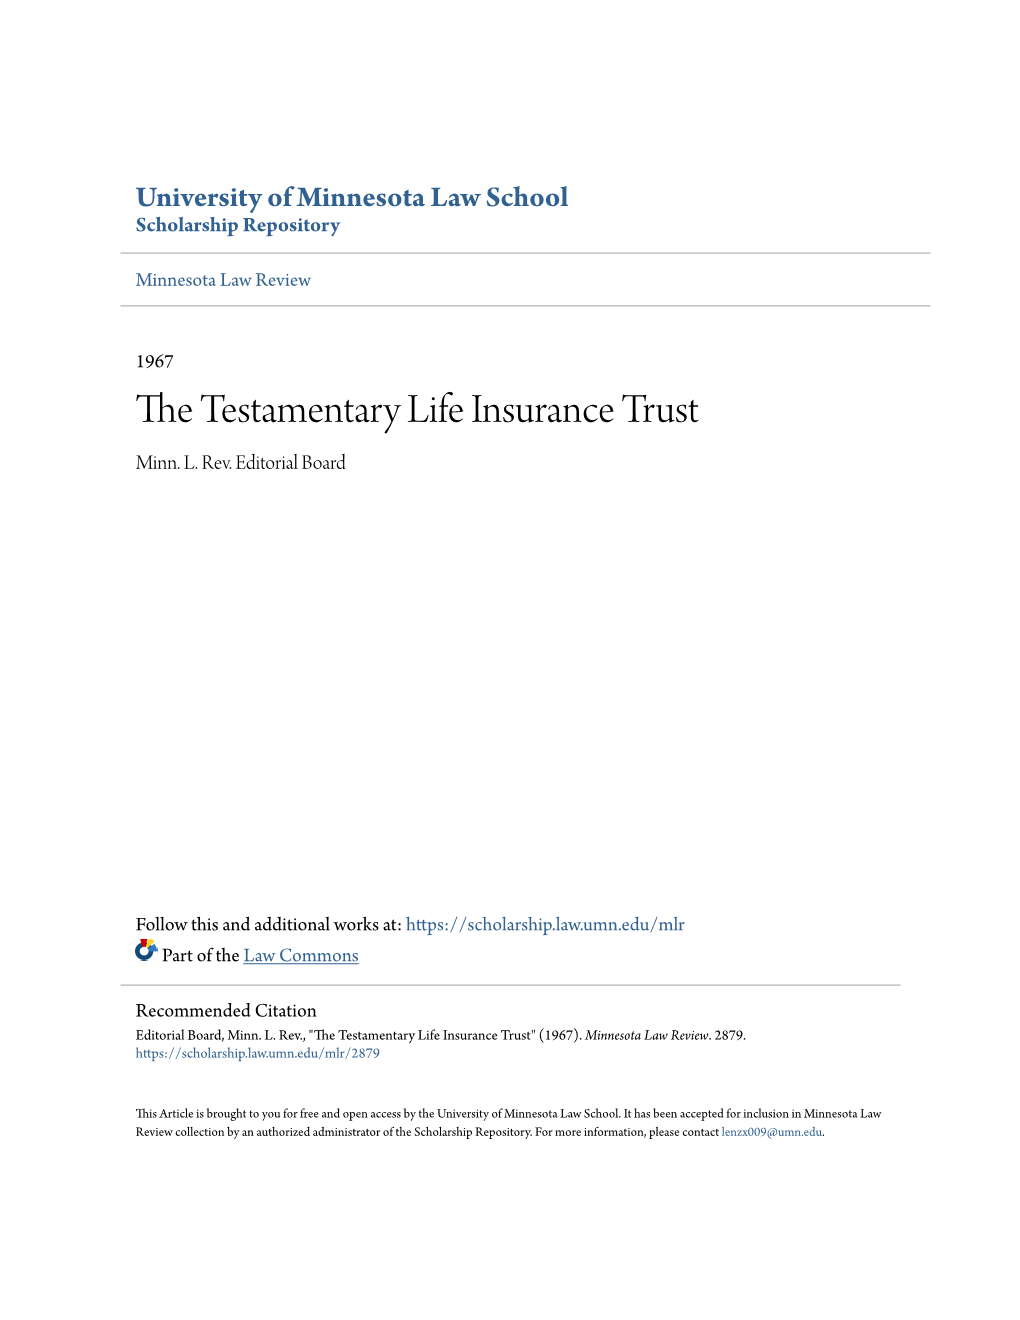 The Testamentary Life Insurance Trust I